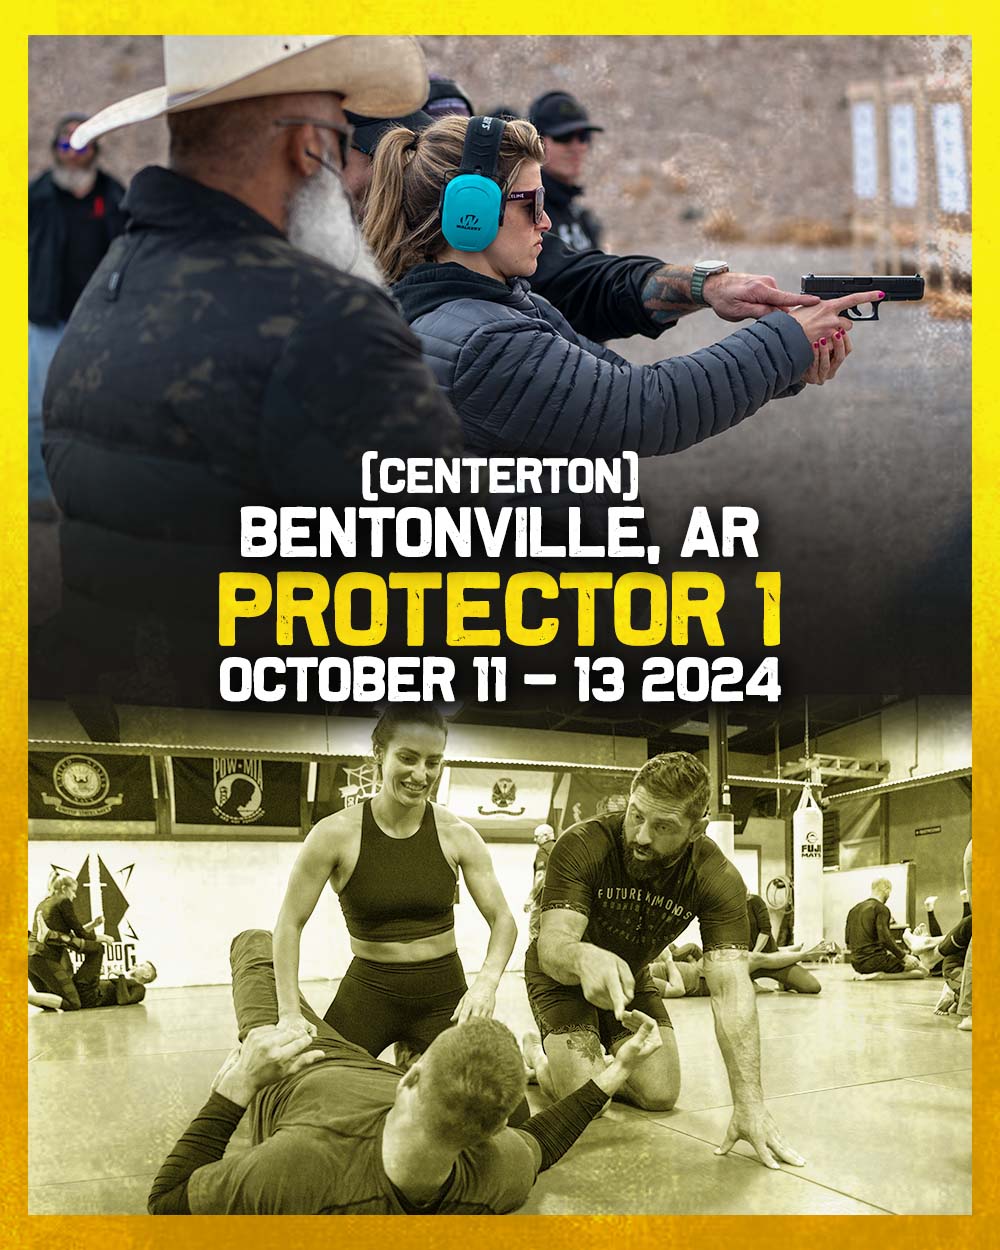 Bentonville, AR (Centerton/Bentonville) - Protector 1 (October 11 - 13 2024)